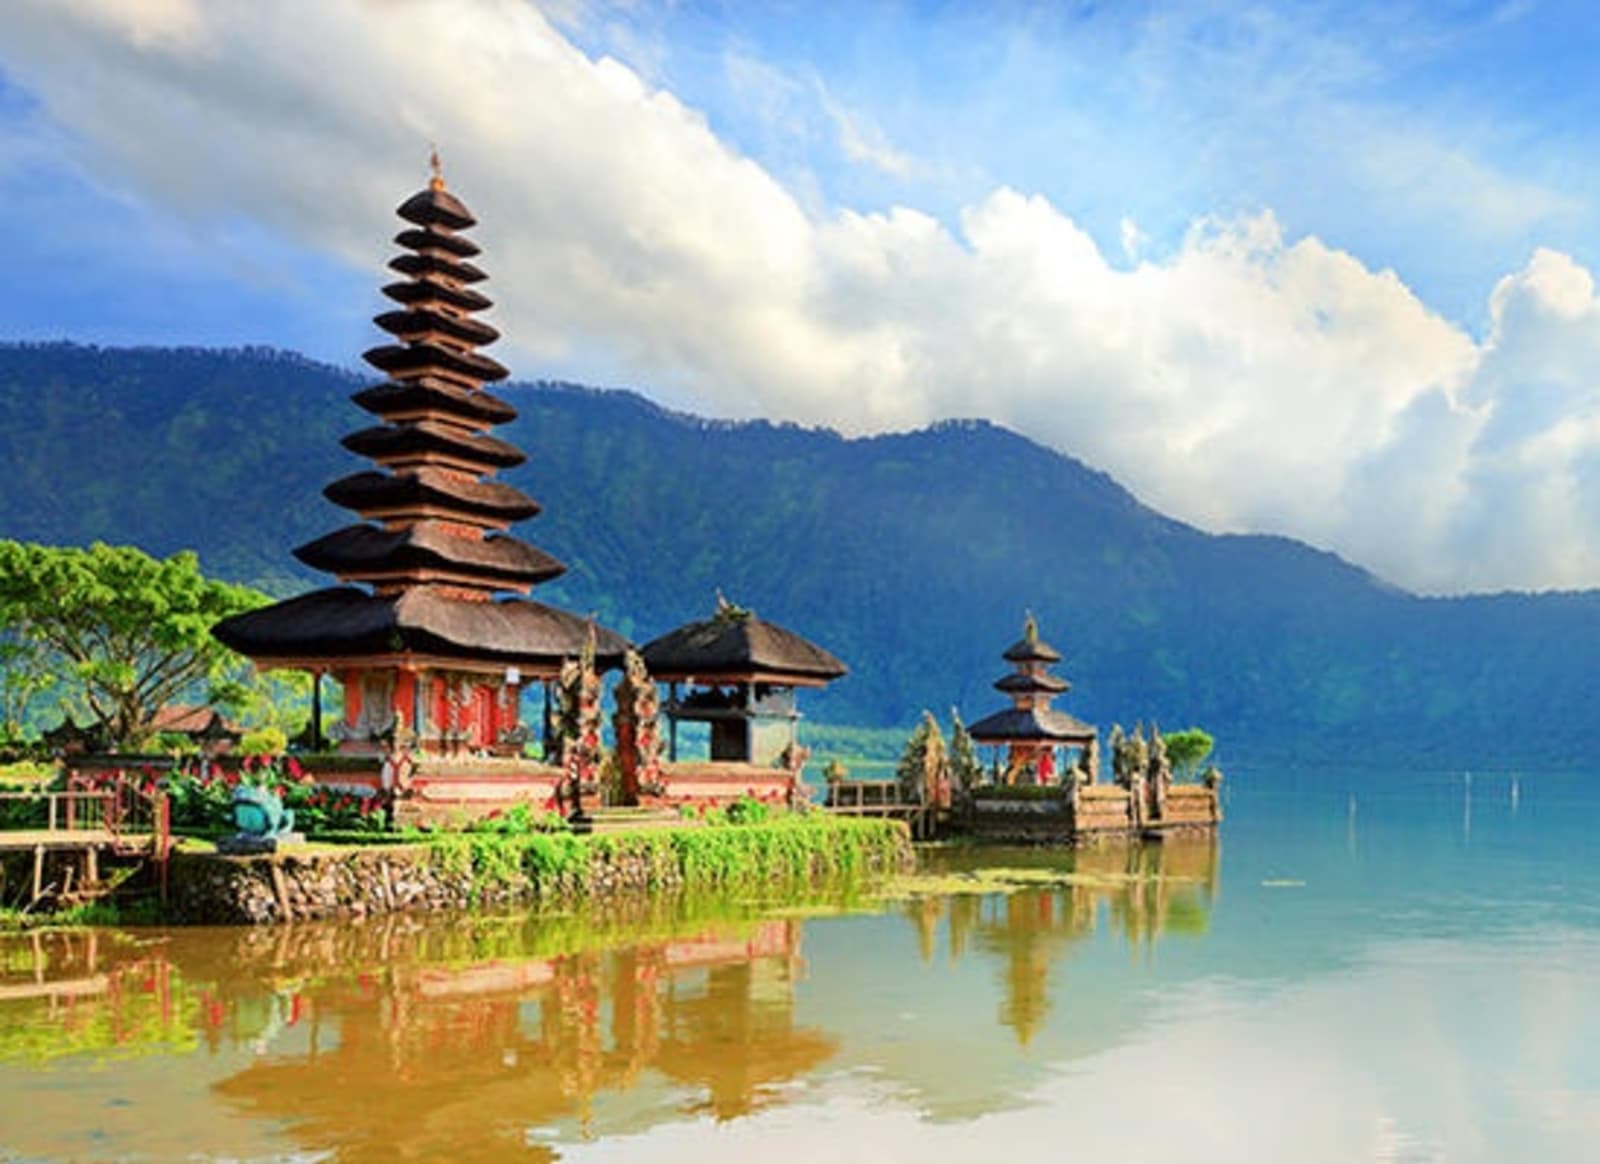 RS-Pura-Ulun-Danu-temple-on-a-lake-Beratan.-Bali.jpg